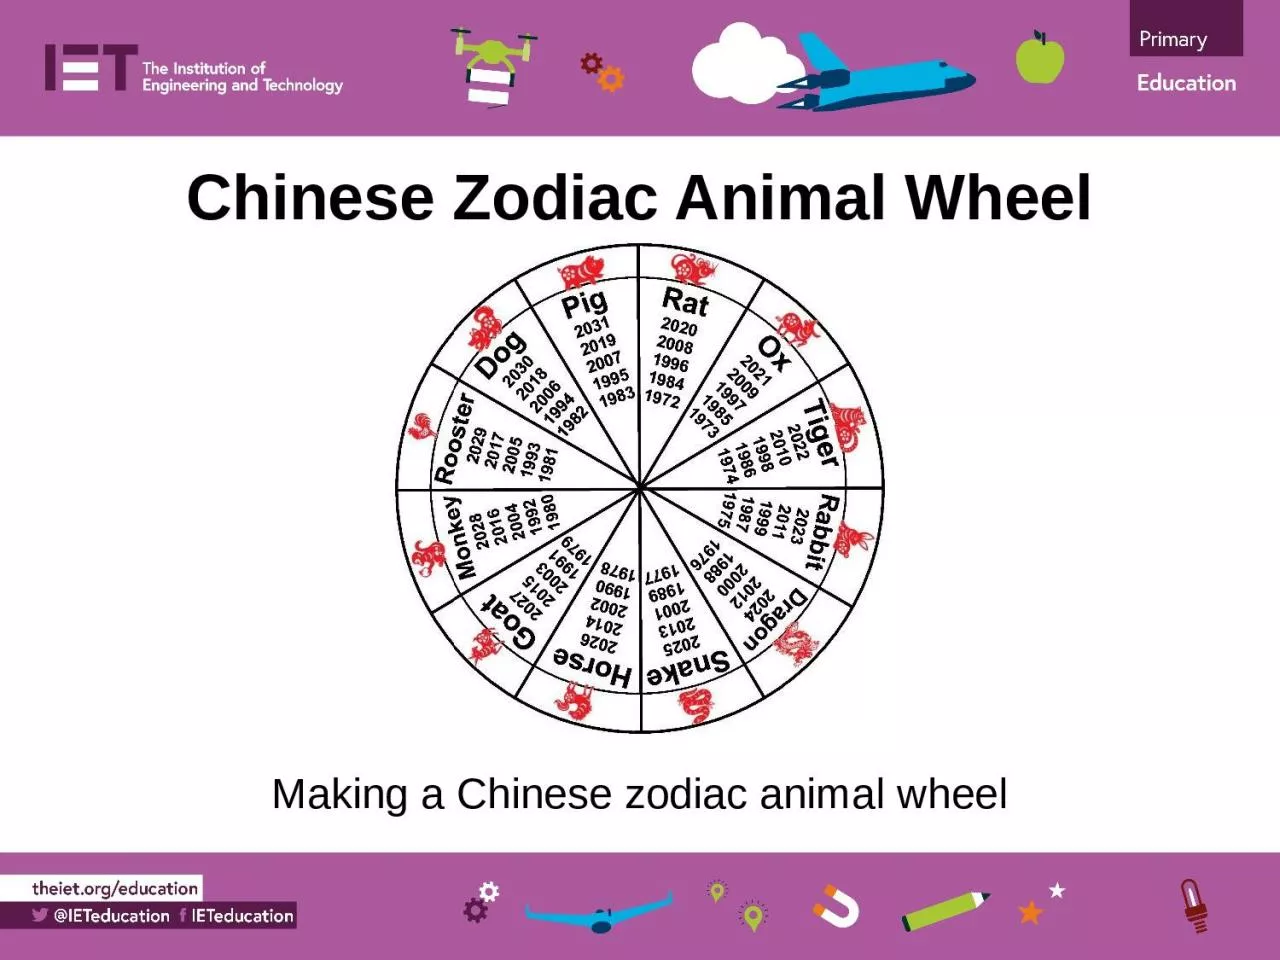 Chinese Zodiac Animal Wheel